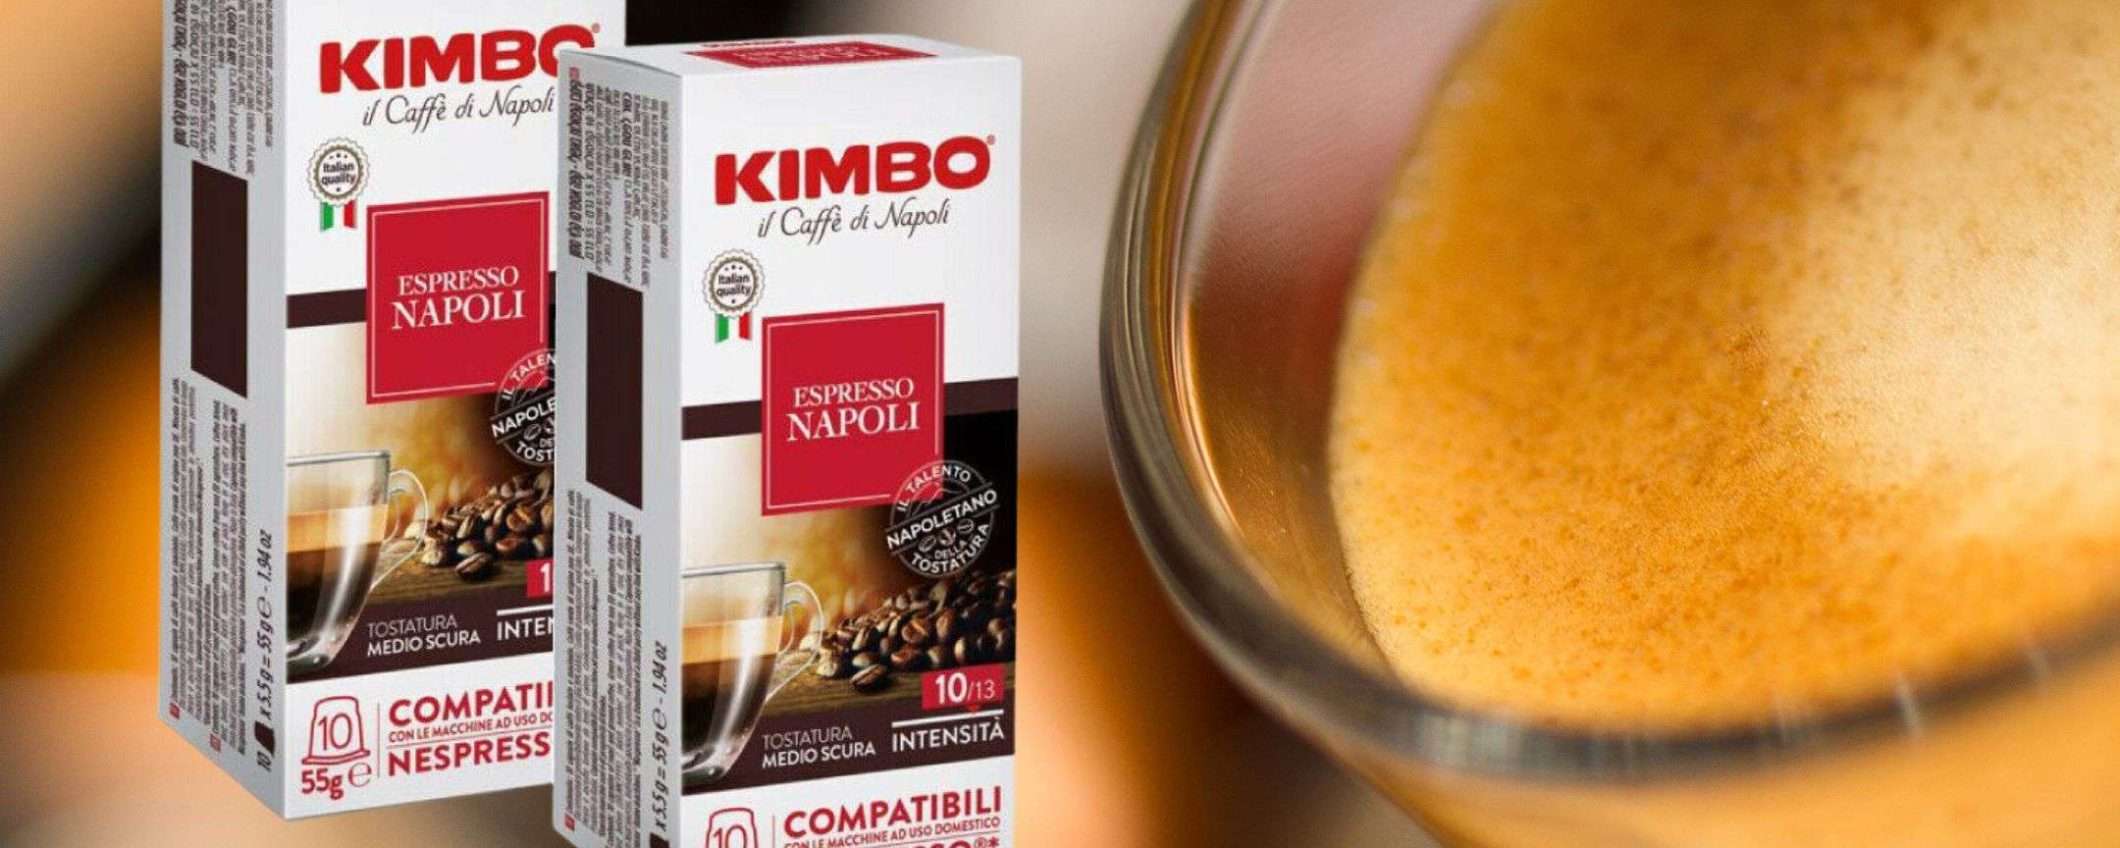 200 capsule caffè Kimbo Miscela Napoli a soli 29€ su eBay (appena 15cent a cialda!)